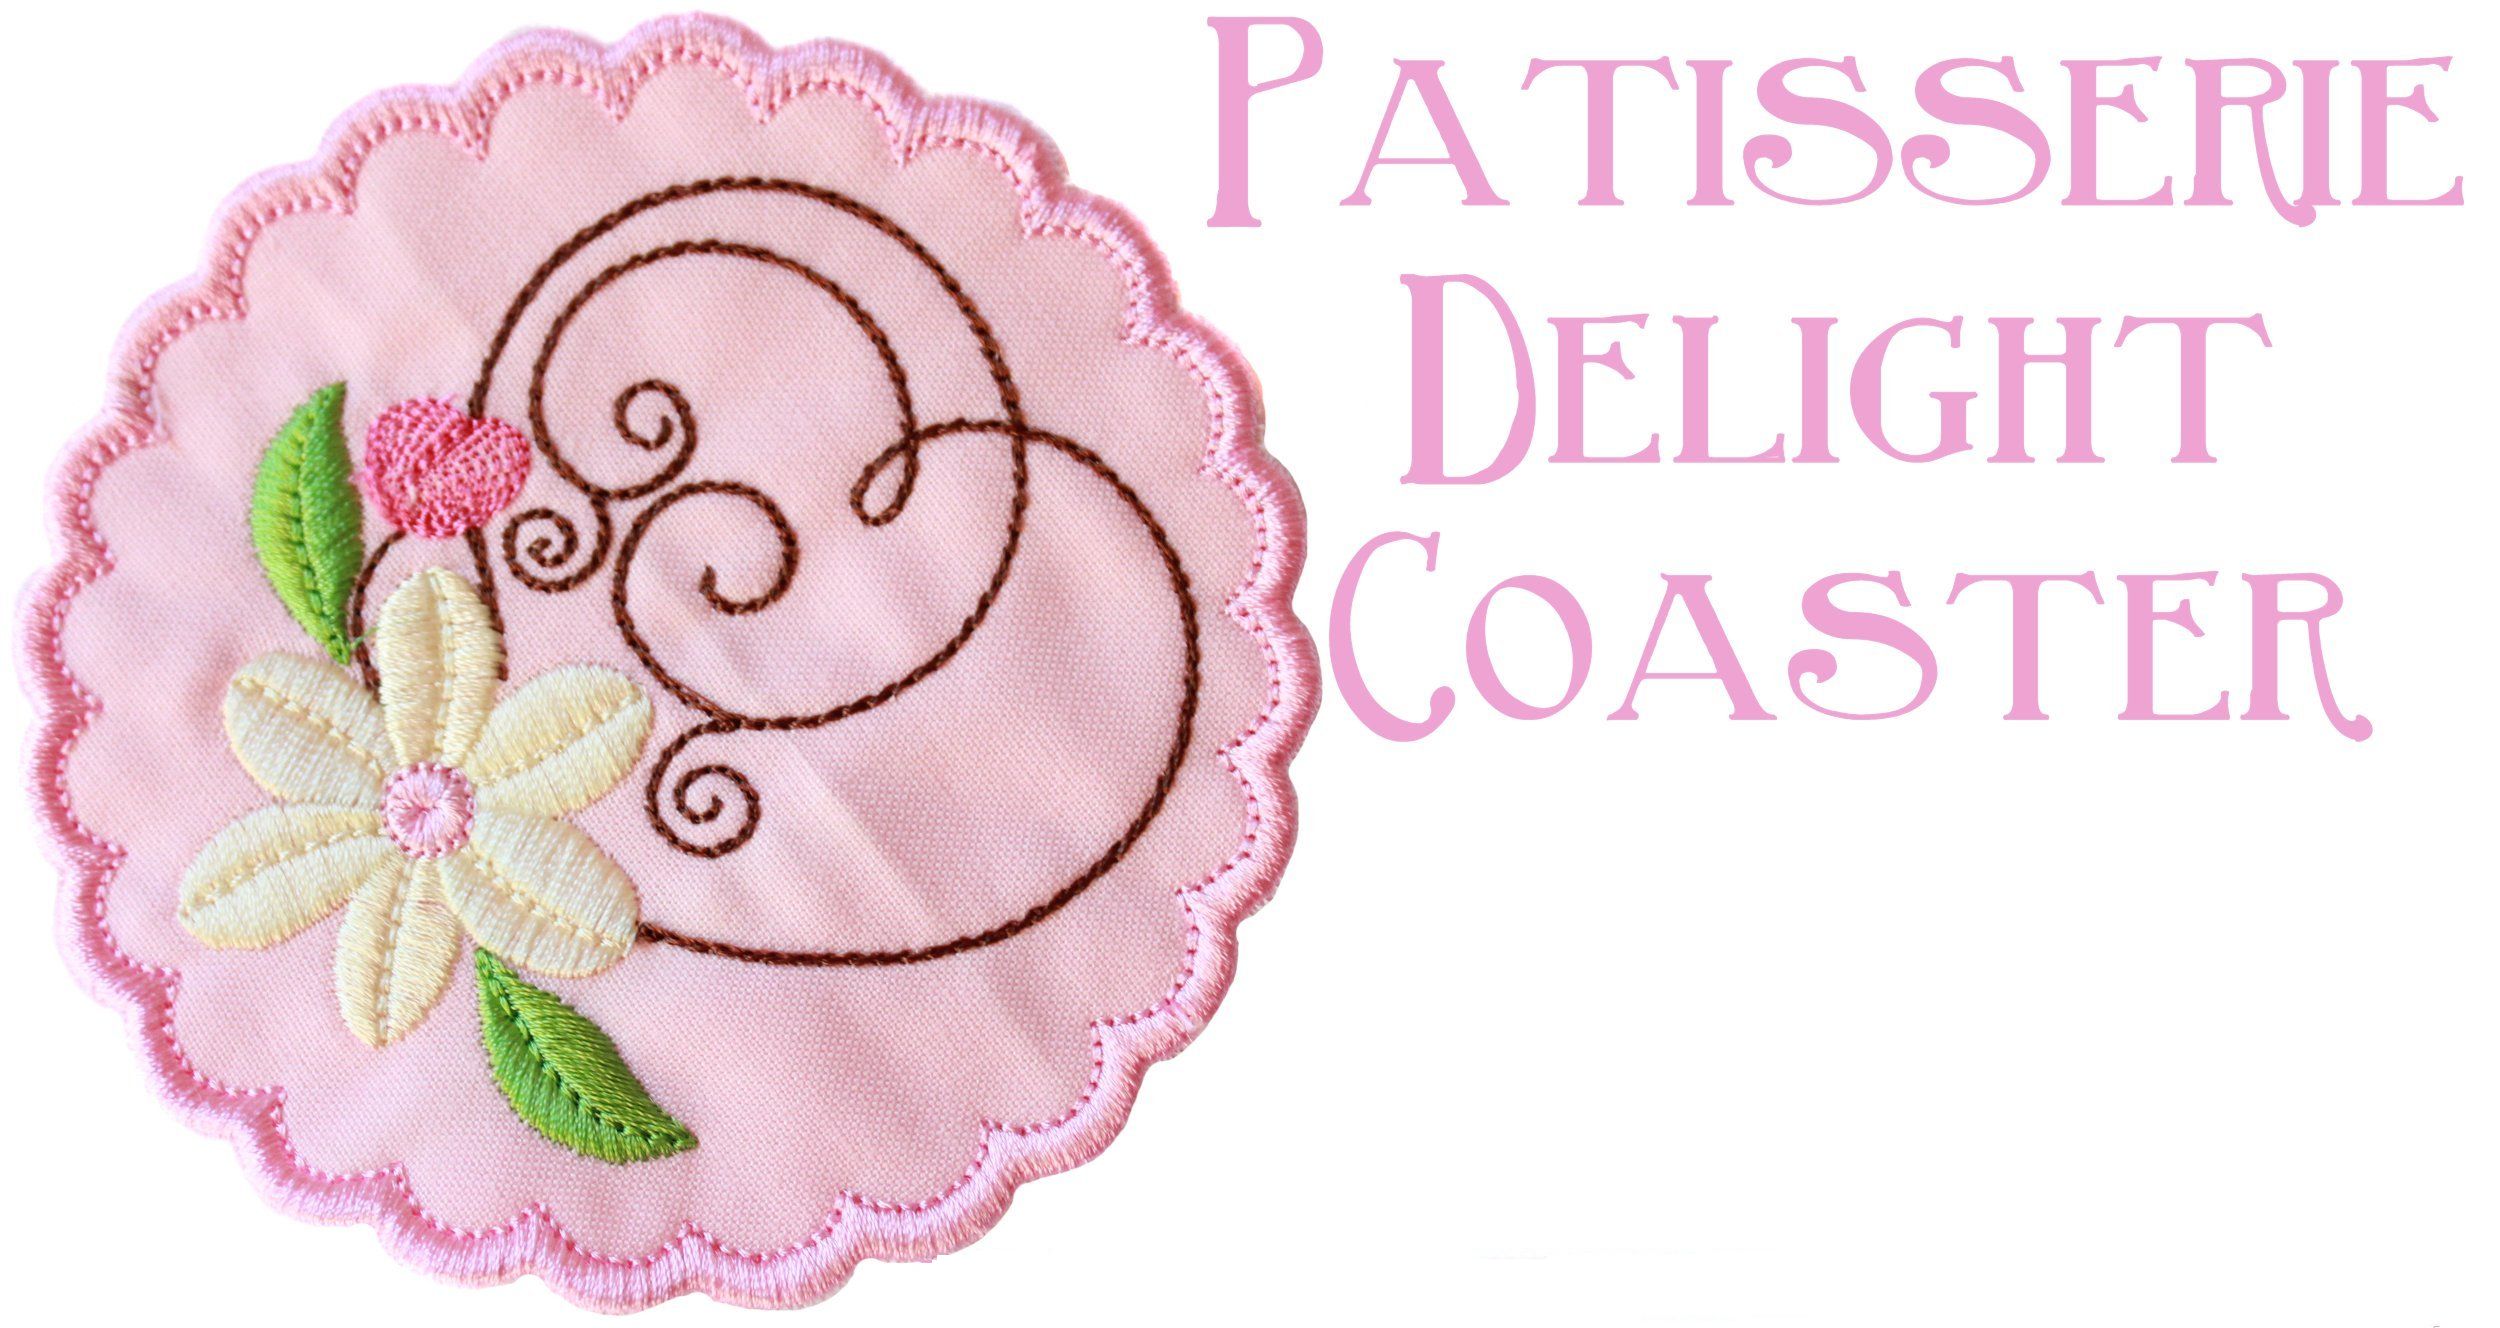 Patisserie Delight Coaster -4